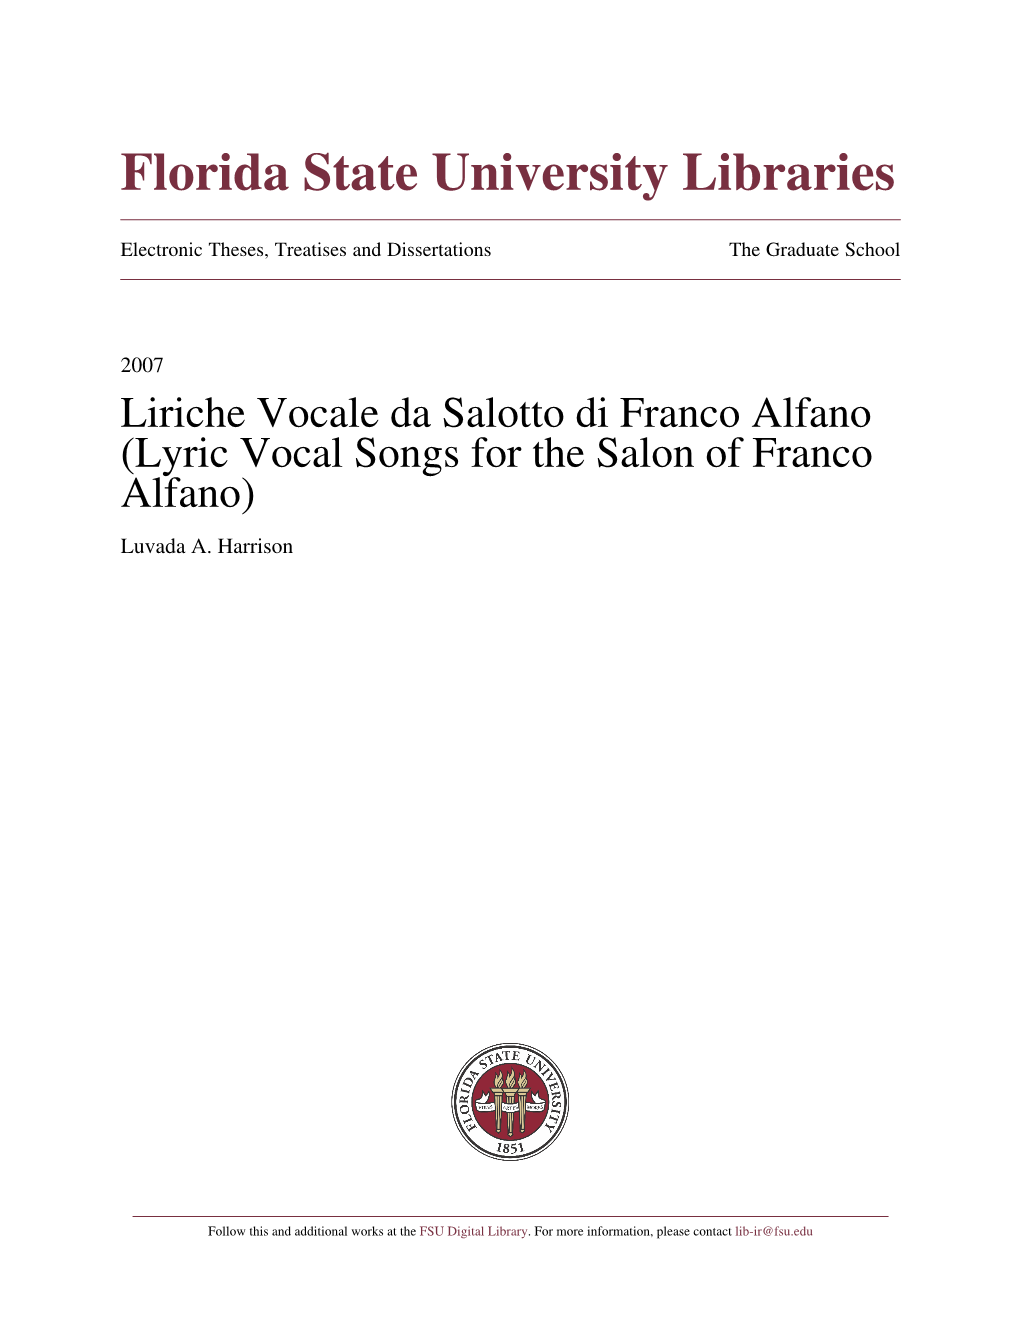 Lyric Vocal Songs for the Salon of Franco Alfano) Luvada A